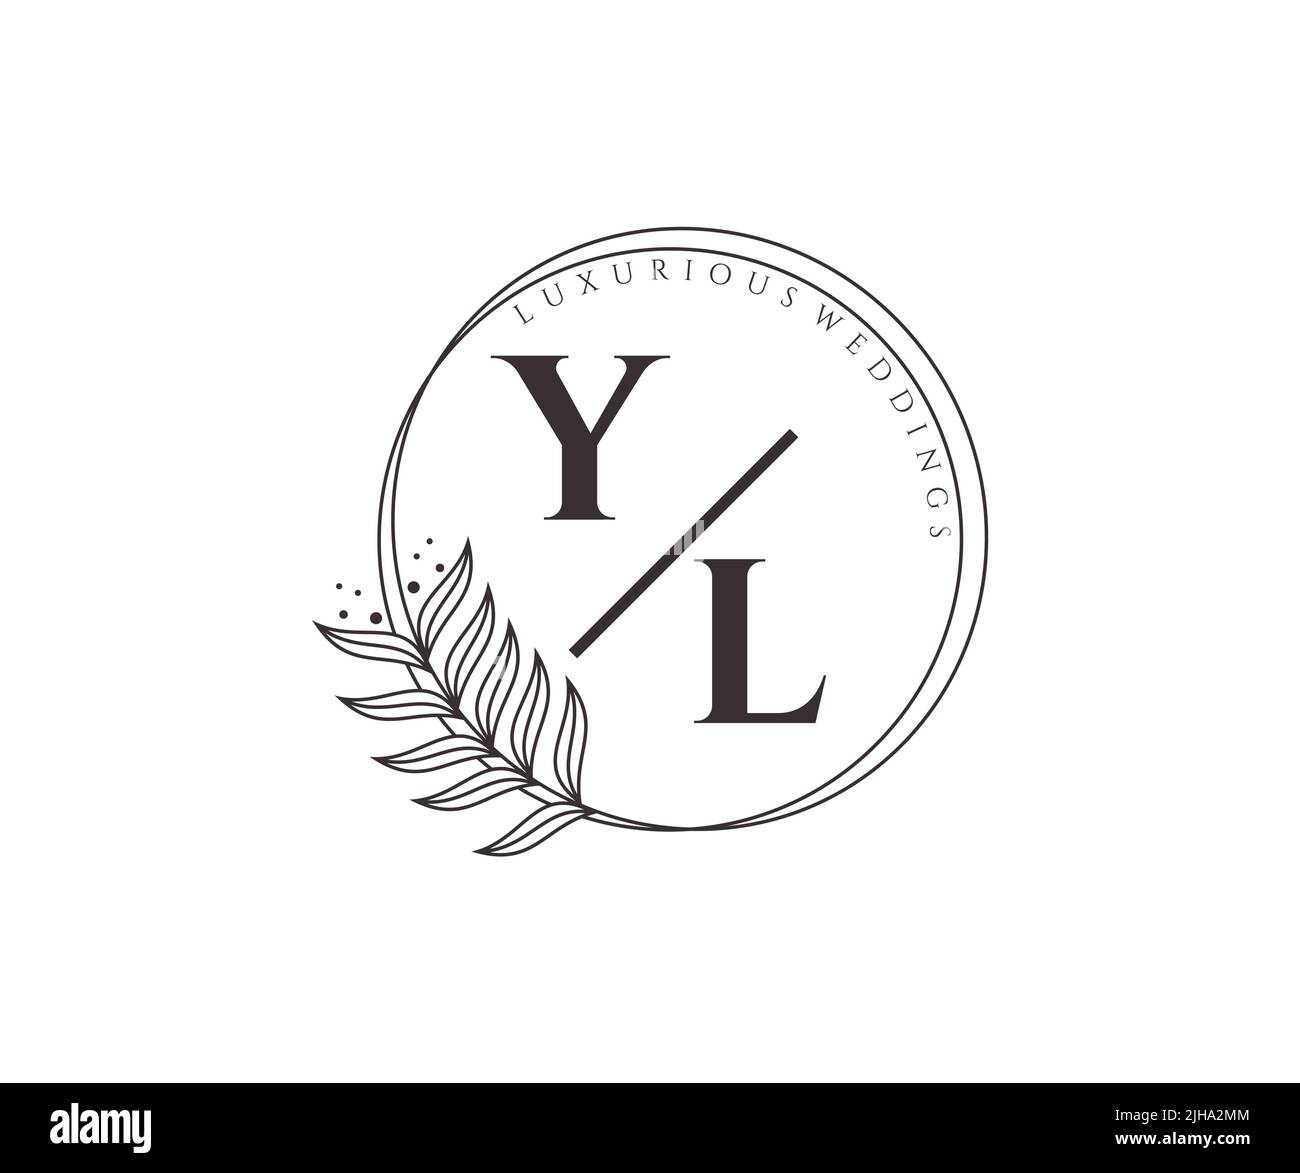 Yl logo Black and White Stock Photos & Images - Alamy